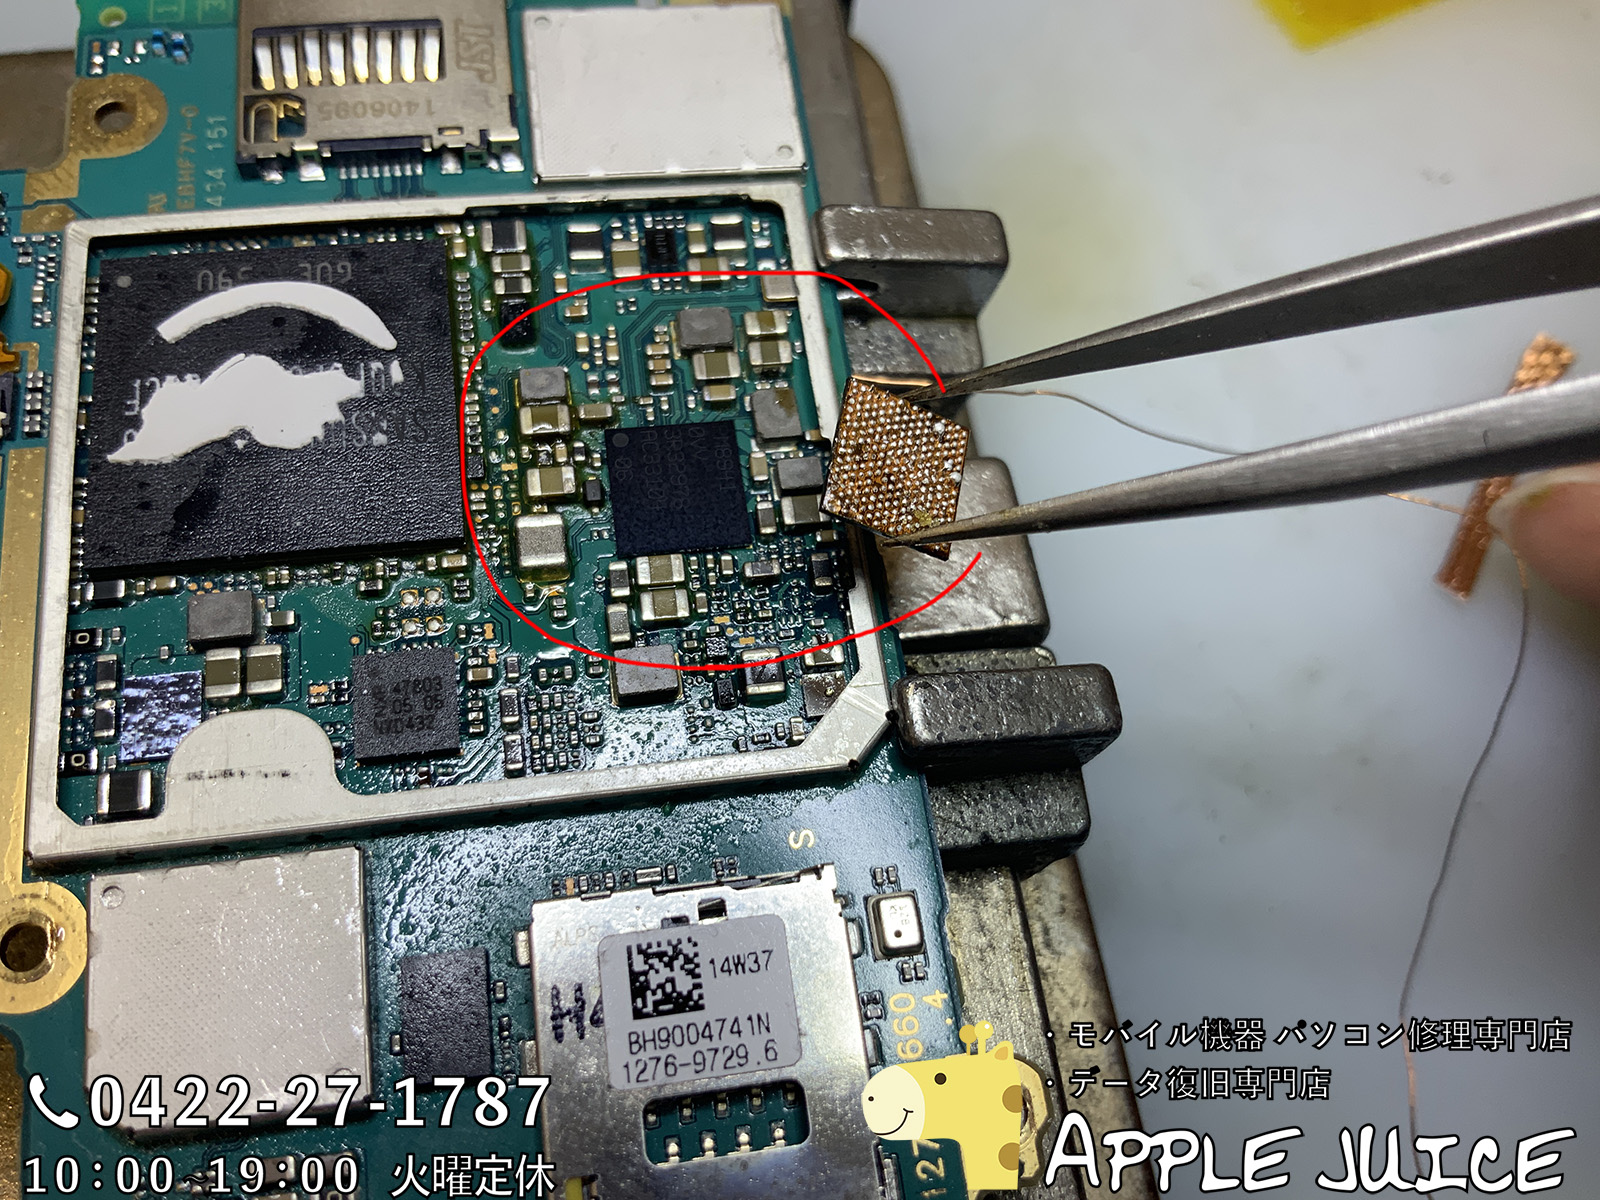 Xperiaのデータ復旧 救出の基板 基盤 修理なら Applejuice Z3の起動しない端末の基板 基盤 修理 Iphone Ipad Ipod Mac修理 データ復旧 基板修理 Applejuice吉祥寺店